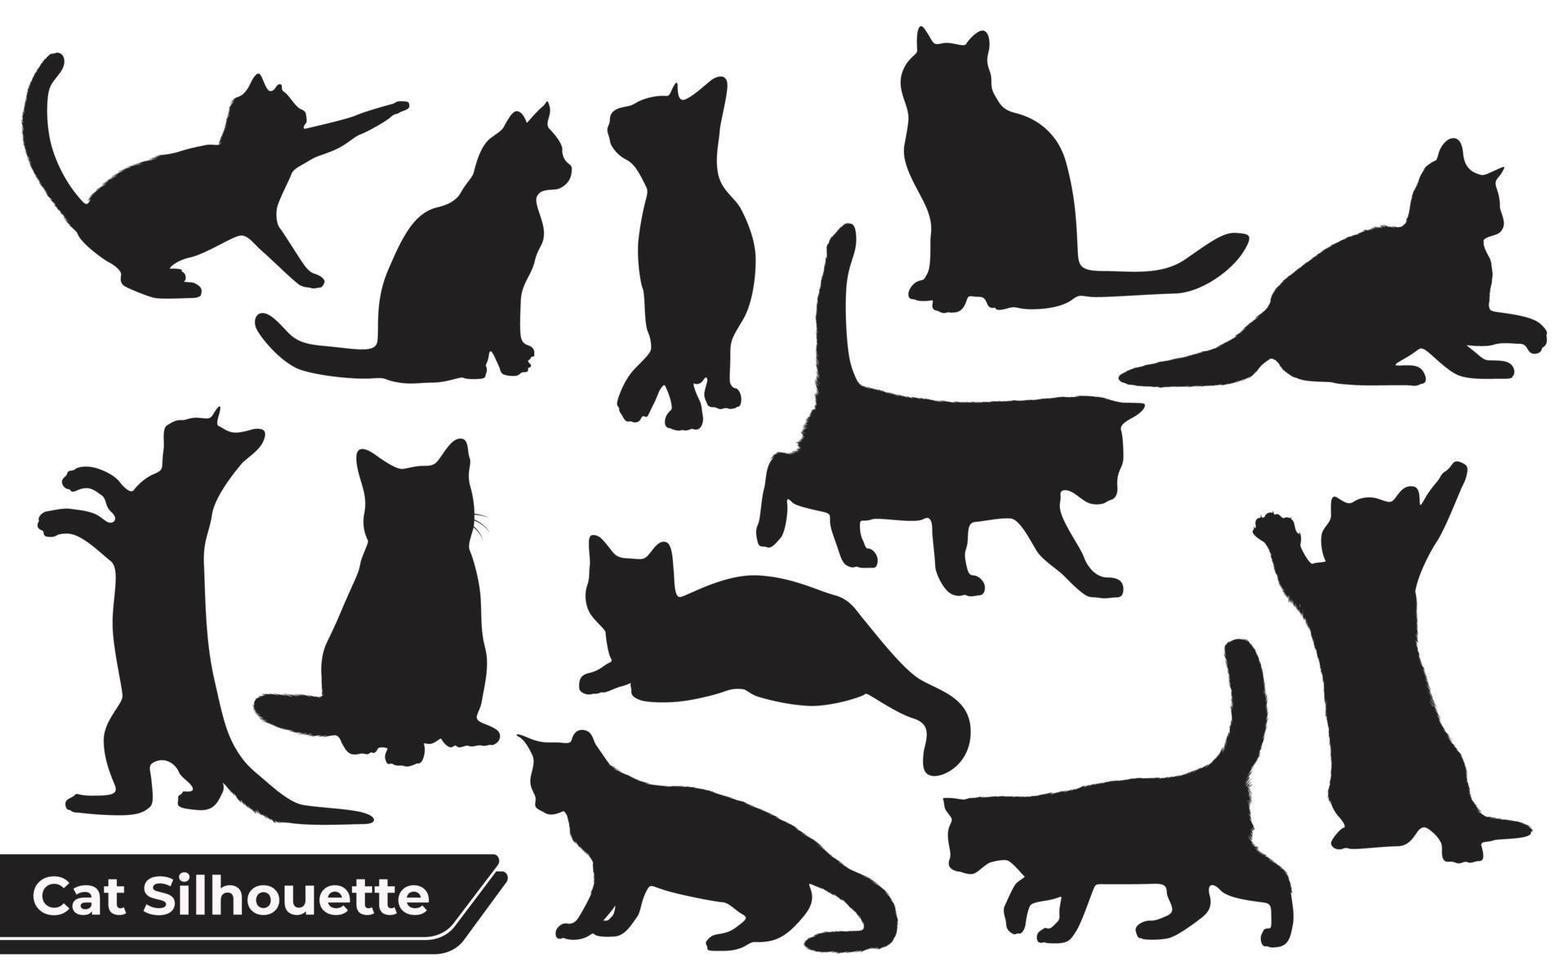 samling av katter siluett i olika positioner vektor